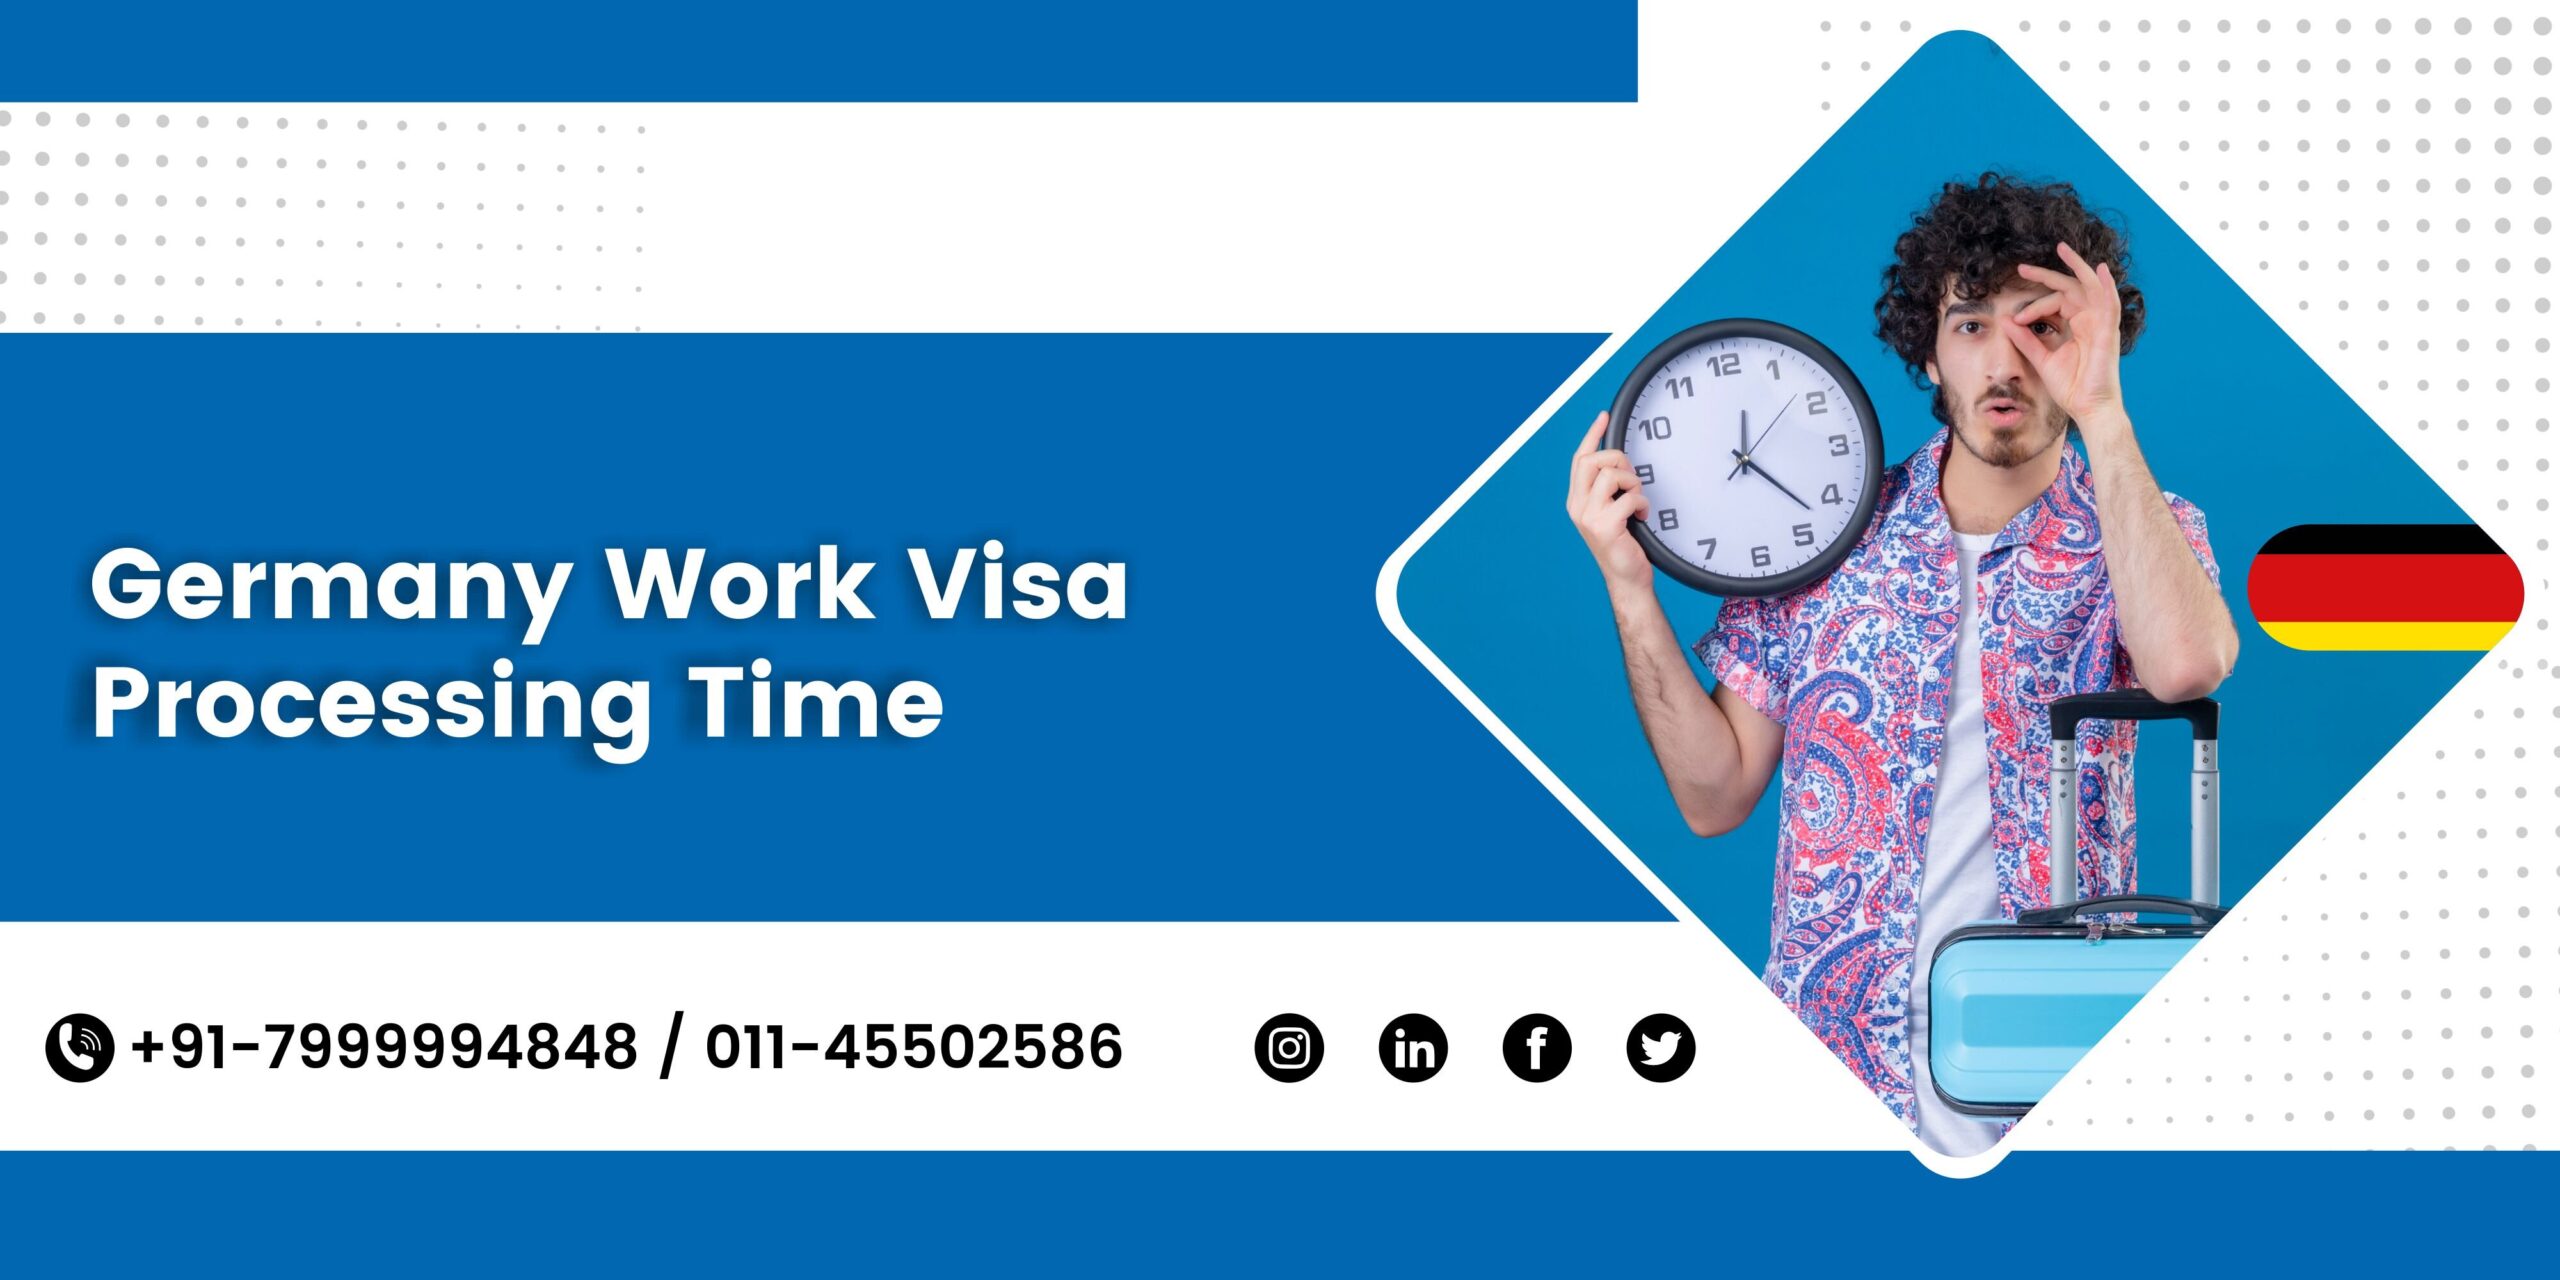 Germany Work Visa Processing Time